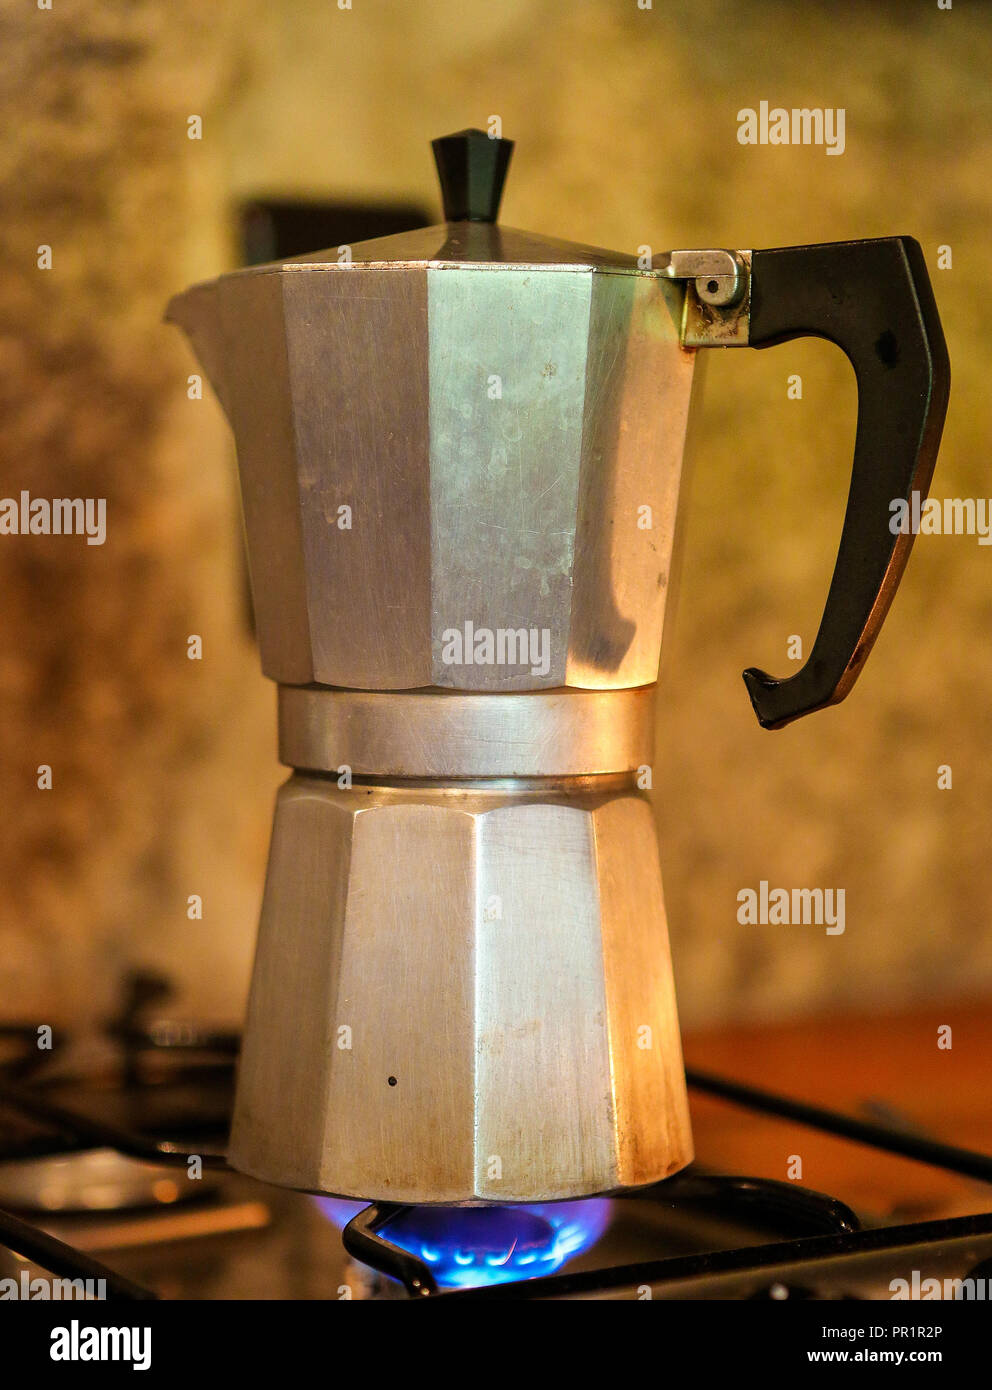 A single Moka pot brewing coffee on a stove Stock Photo